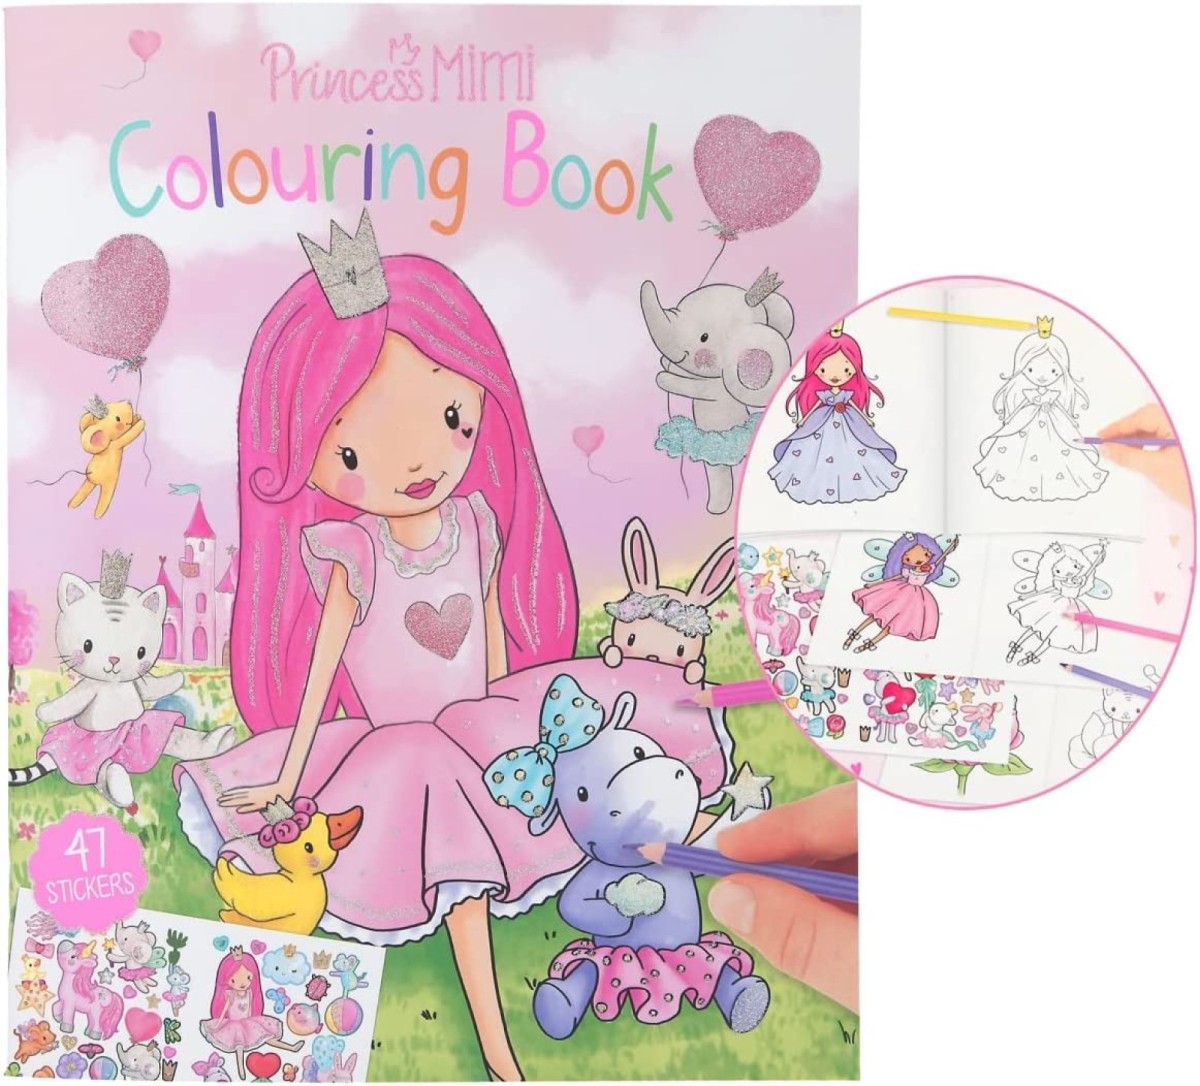 Princess Mimi Colouring Book - Plaza Toymaster